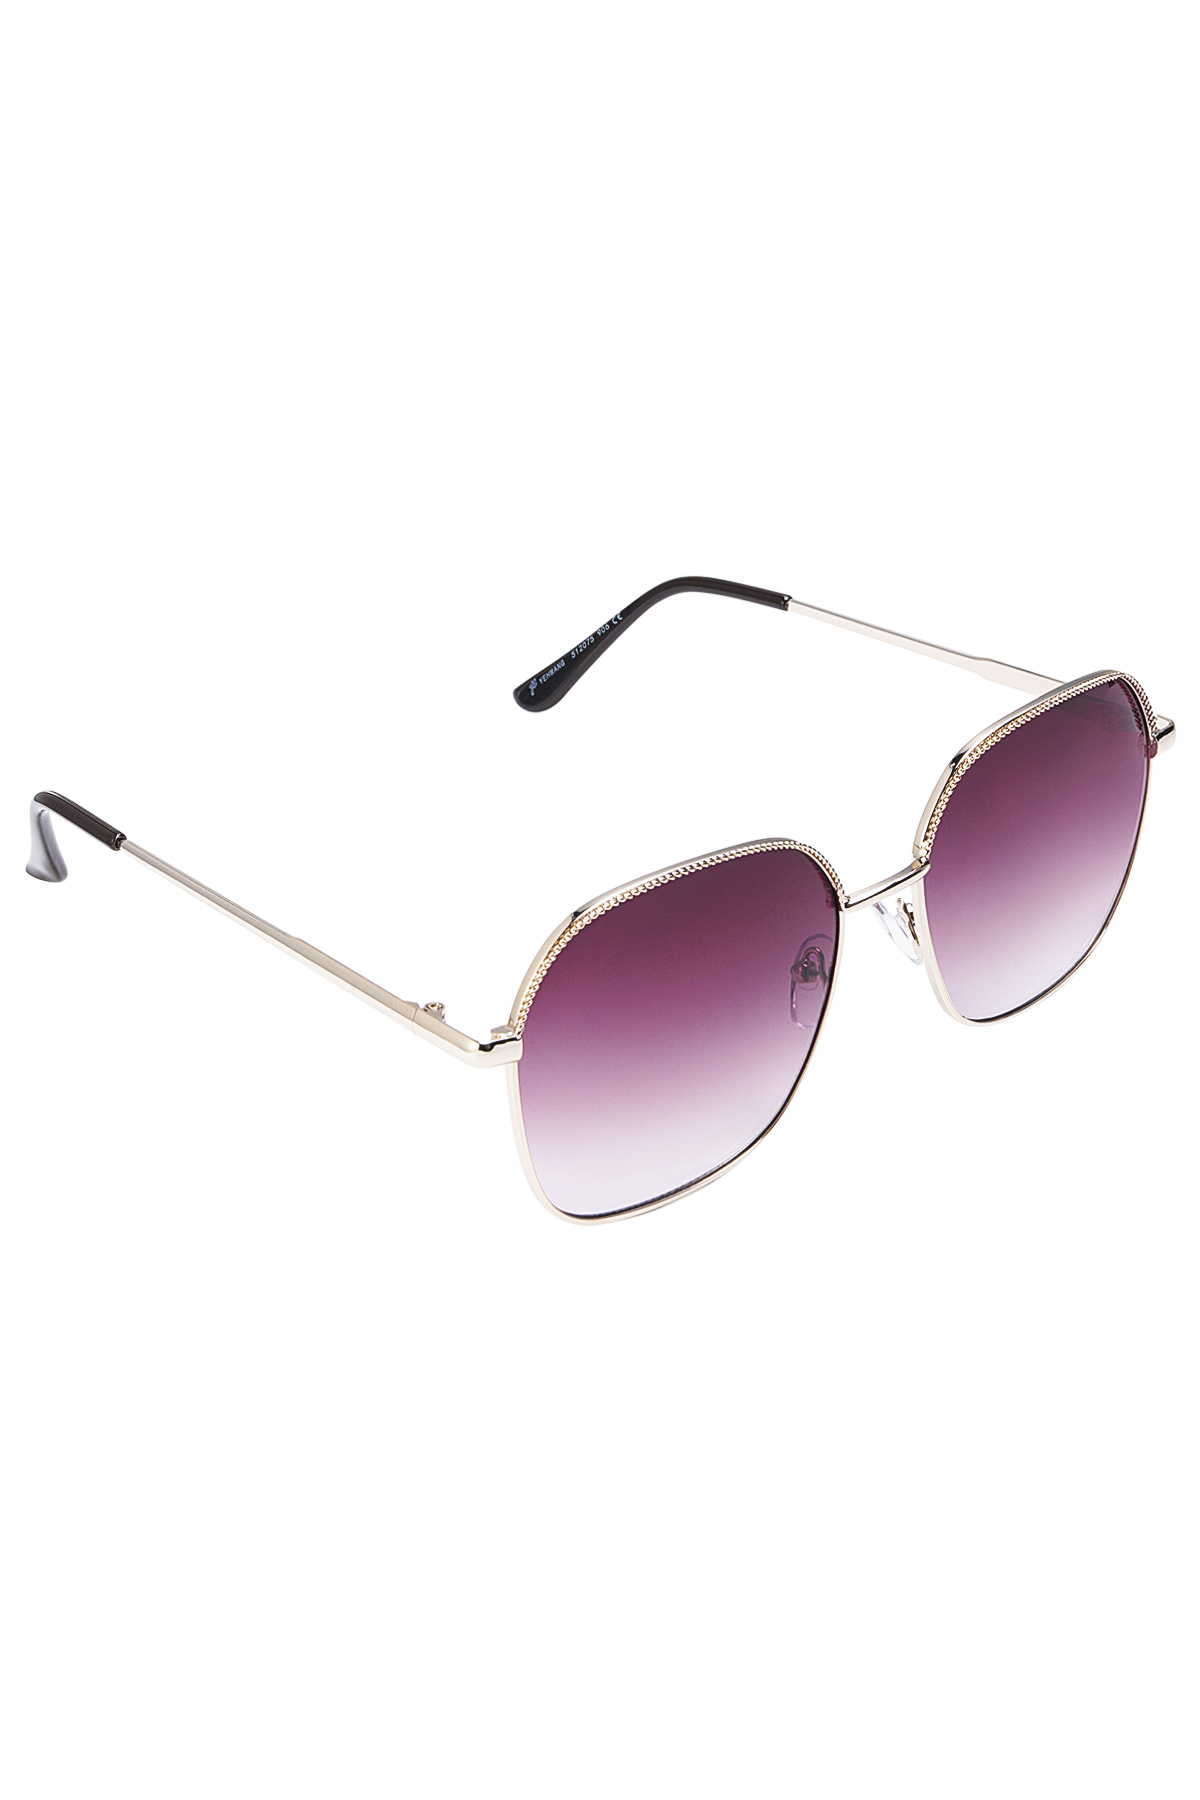 Casual sunglasses - purple